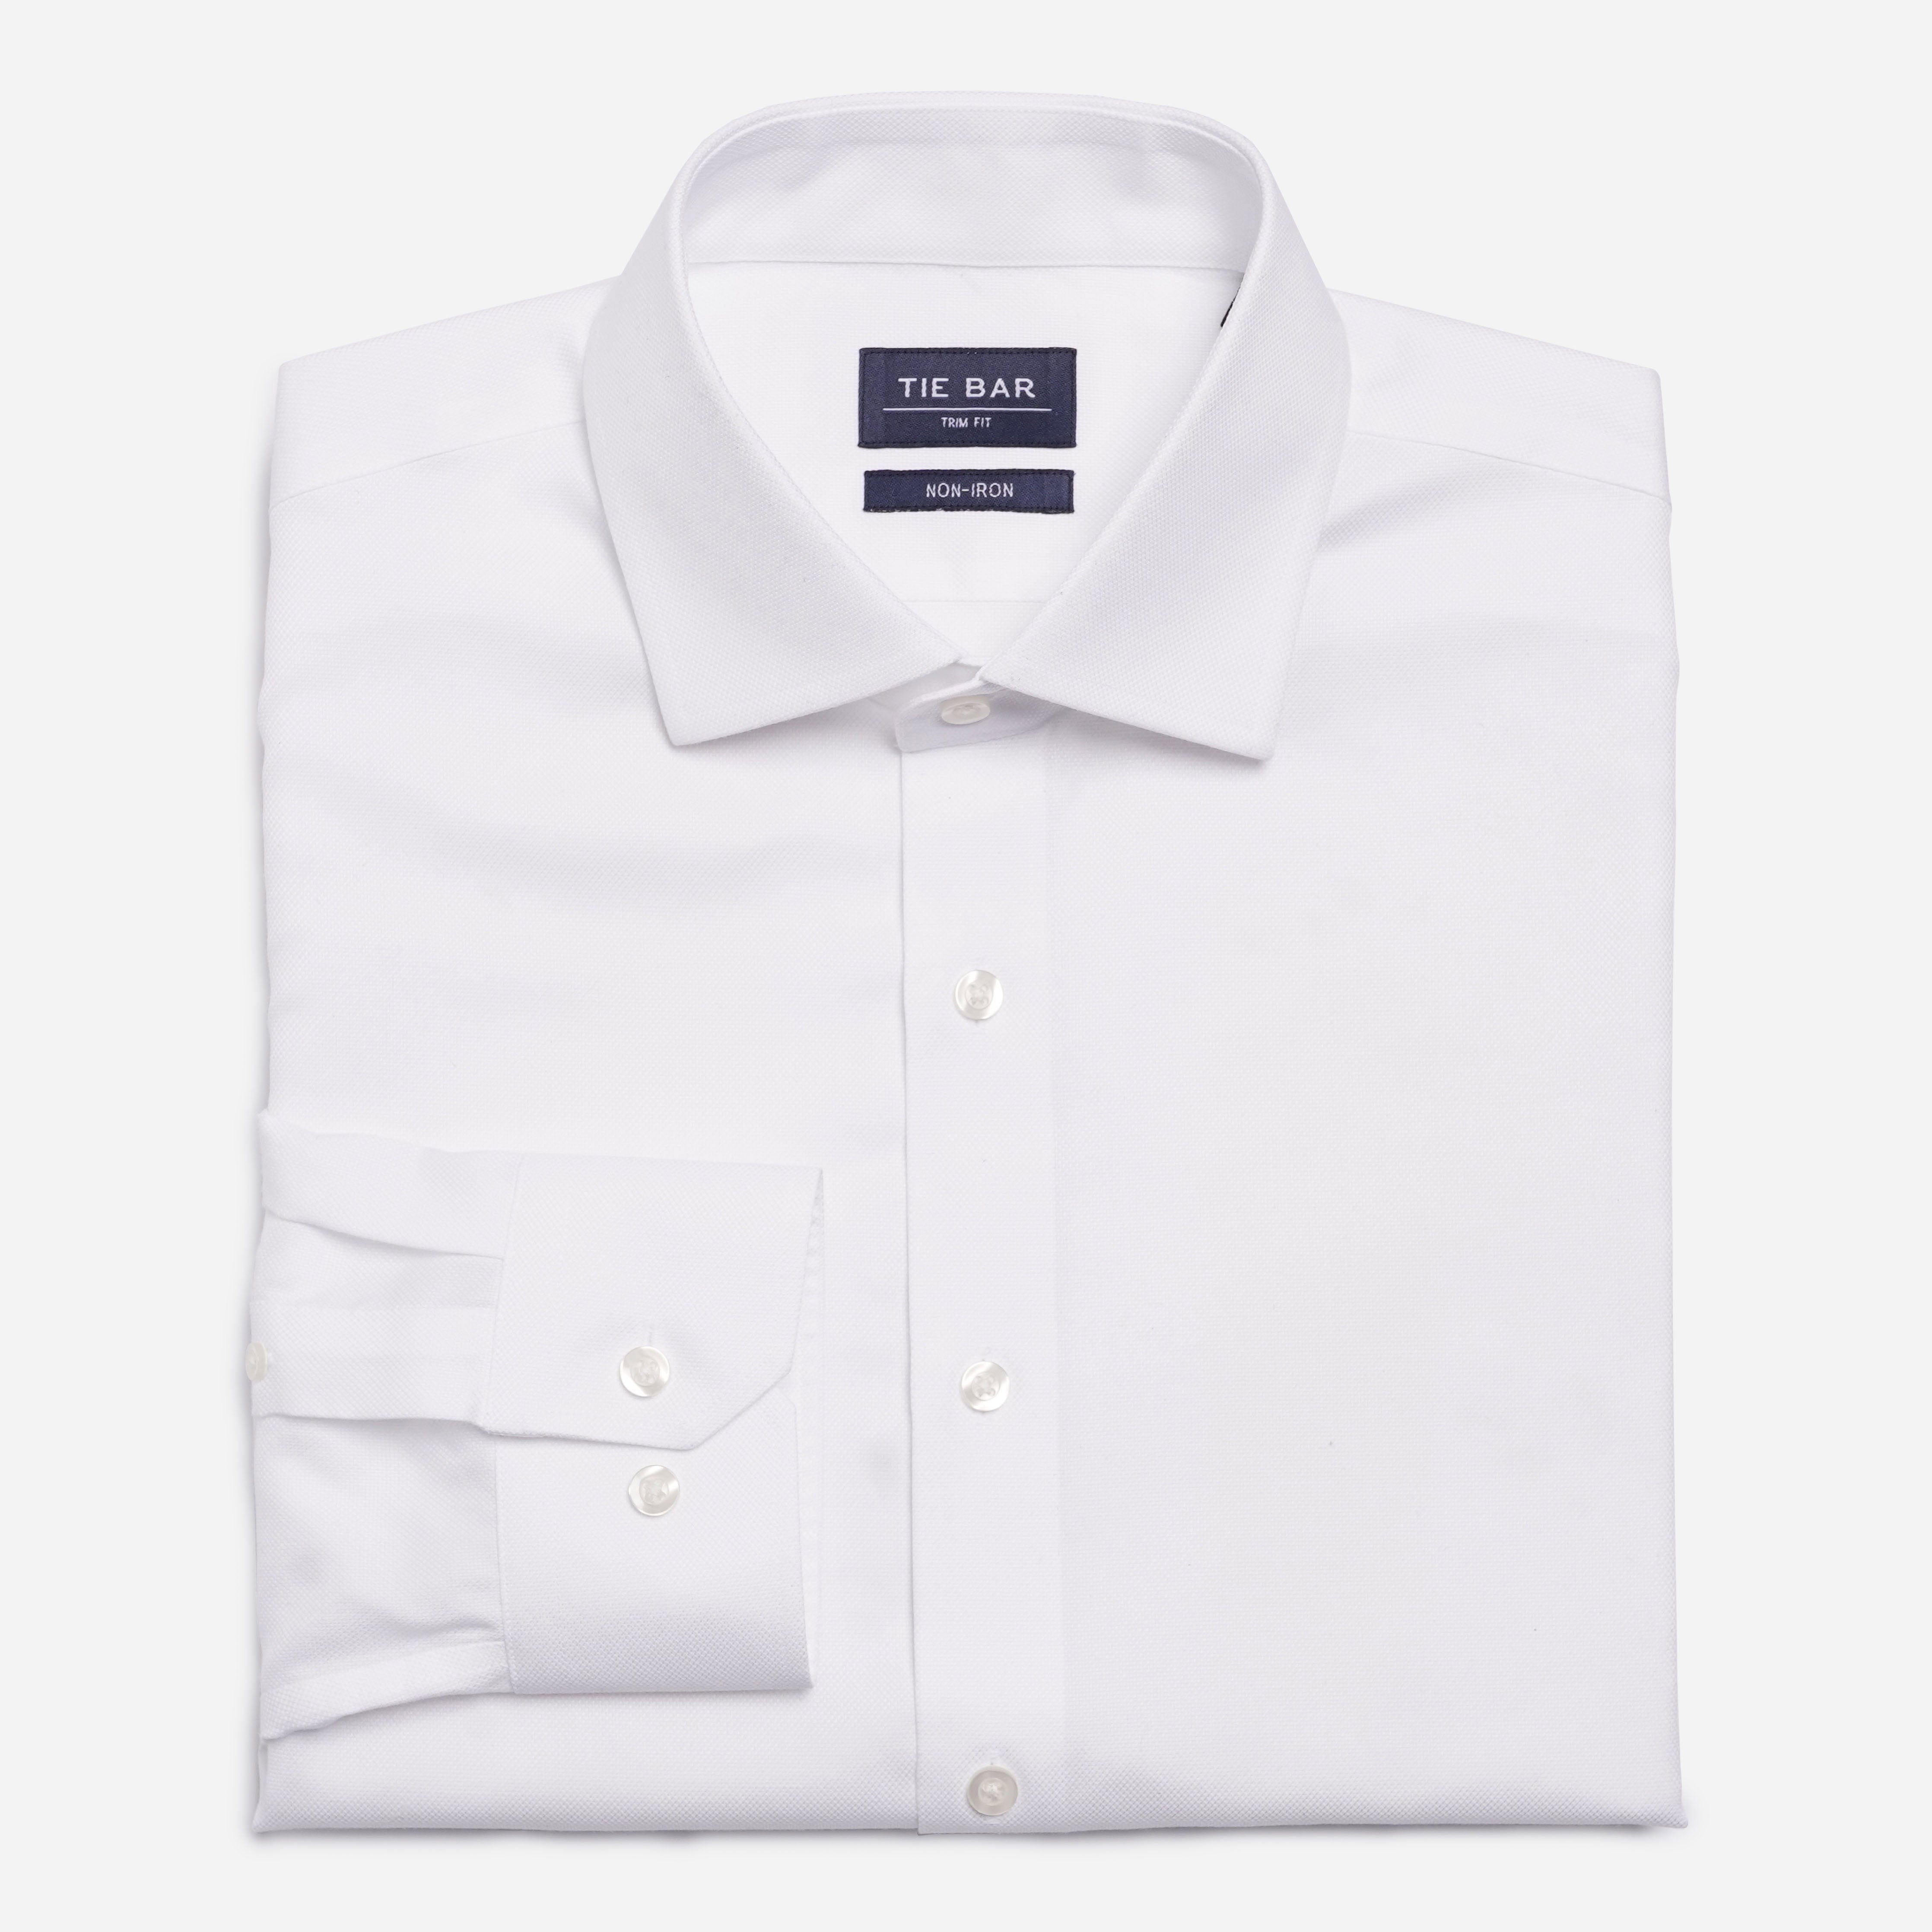 mens white dress shirt